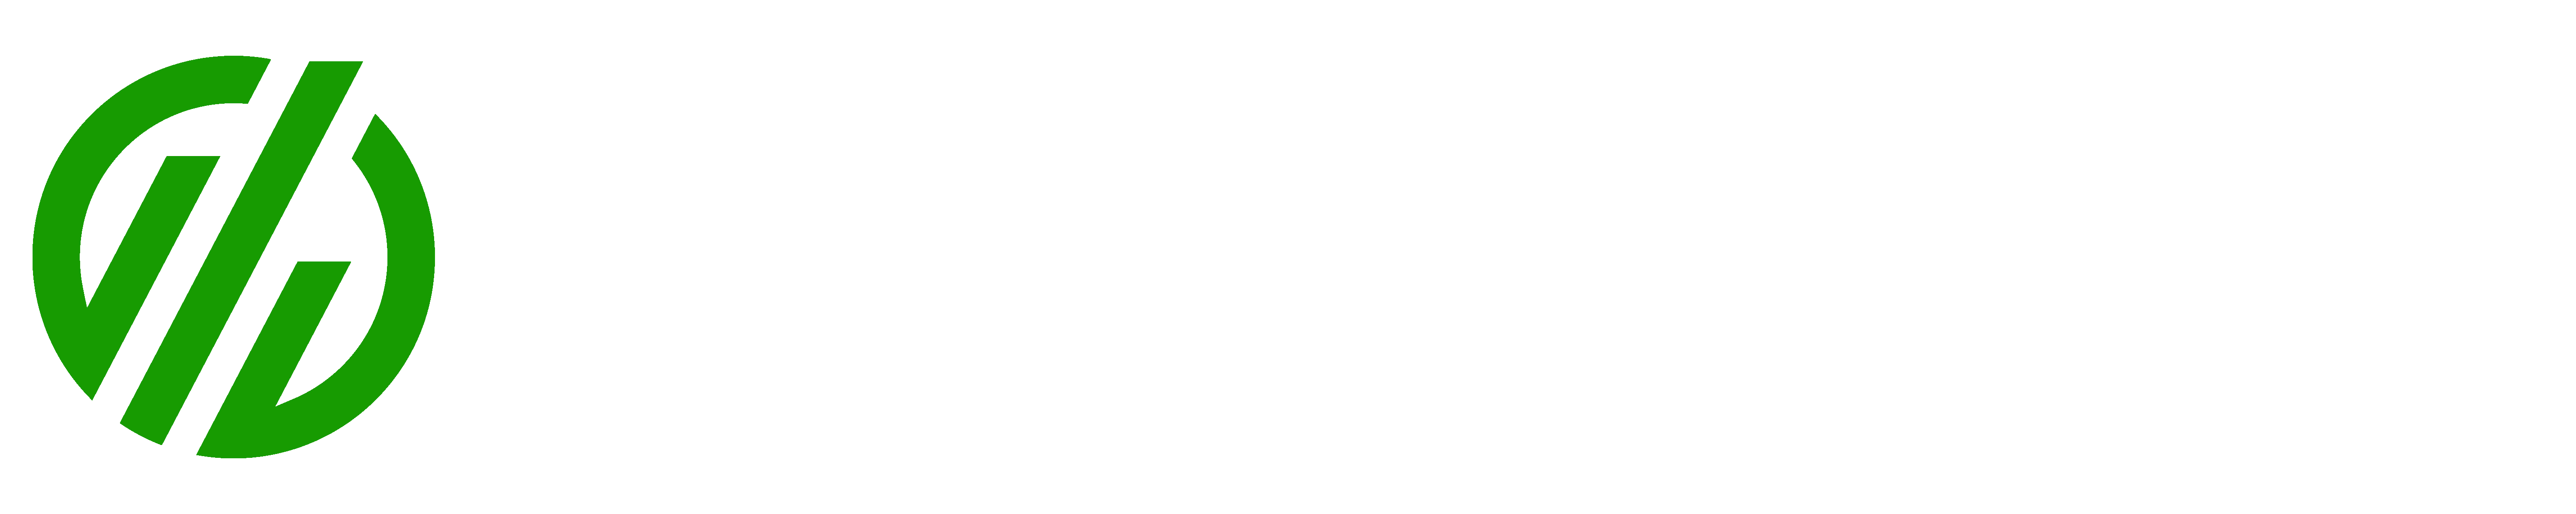 machinemetrics-logo-white